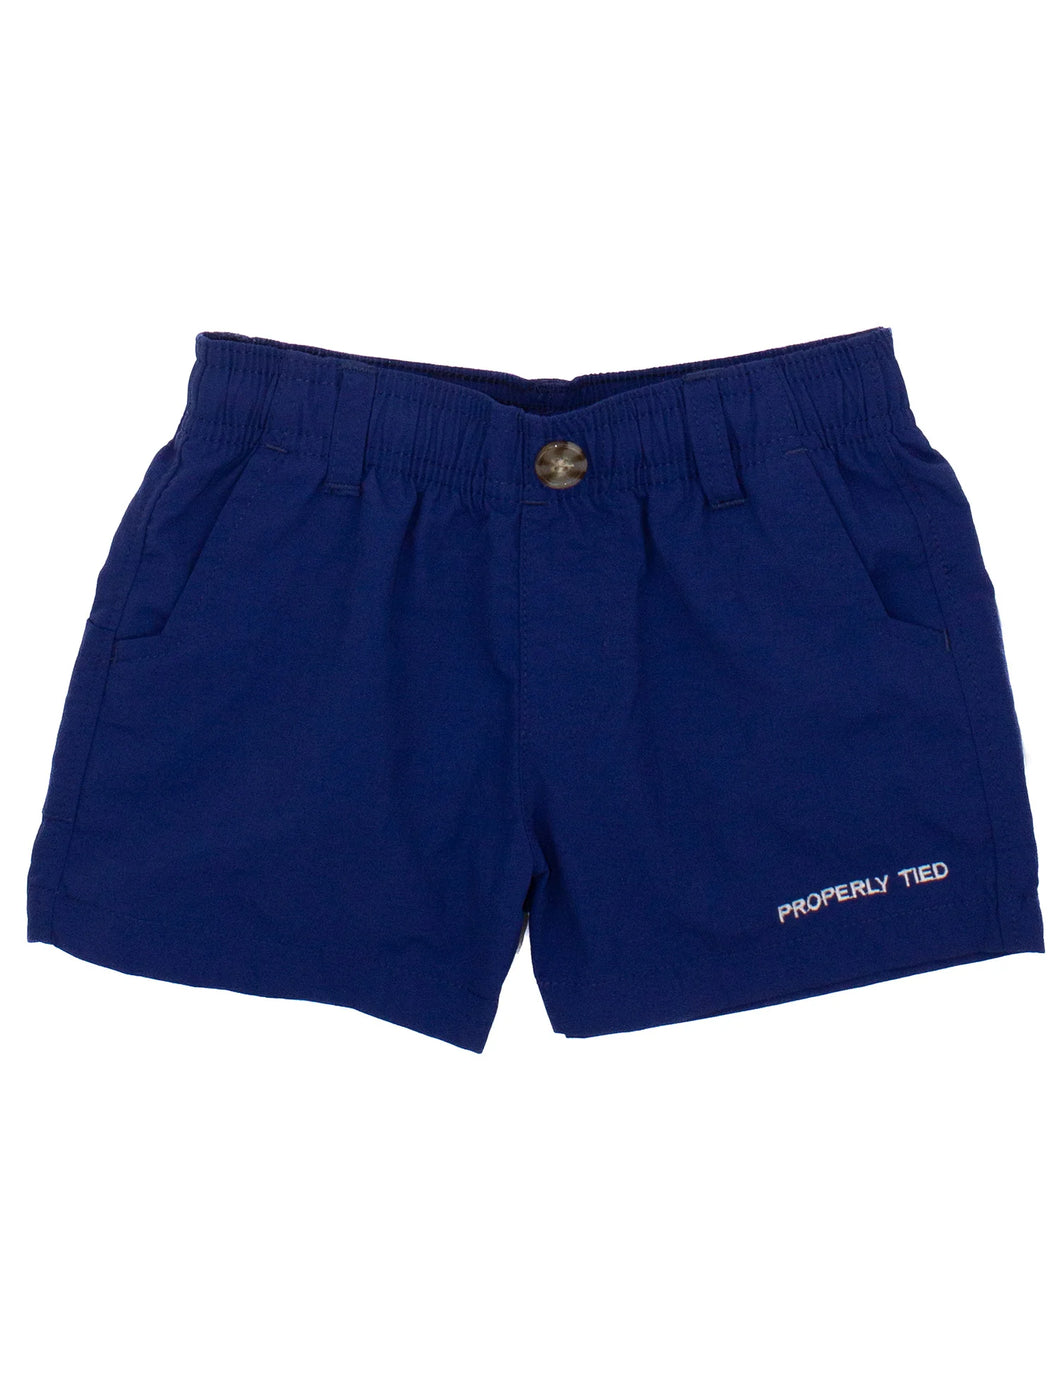 Properly Tied - Marine Navy - Mallard Shorts